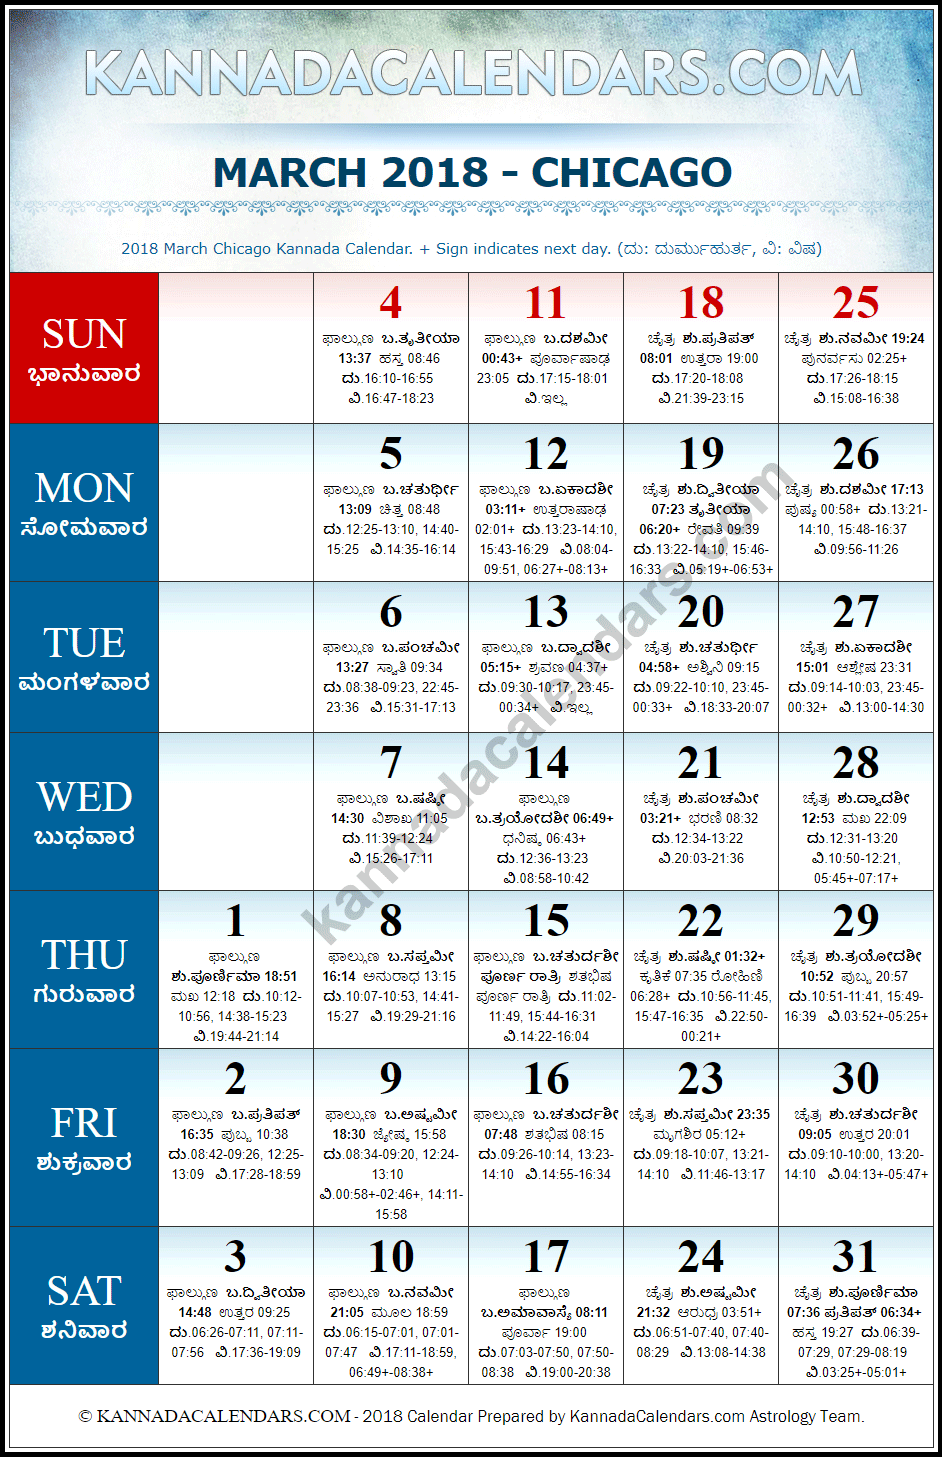 March 2018 Kannada Calendar for Chicago, USA